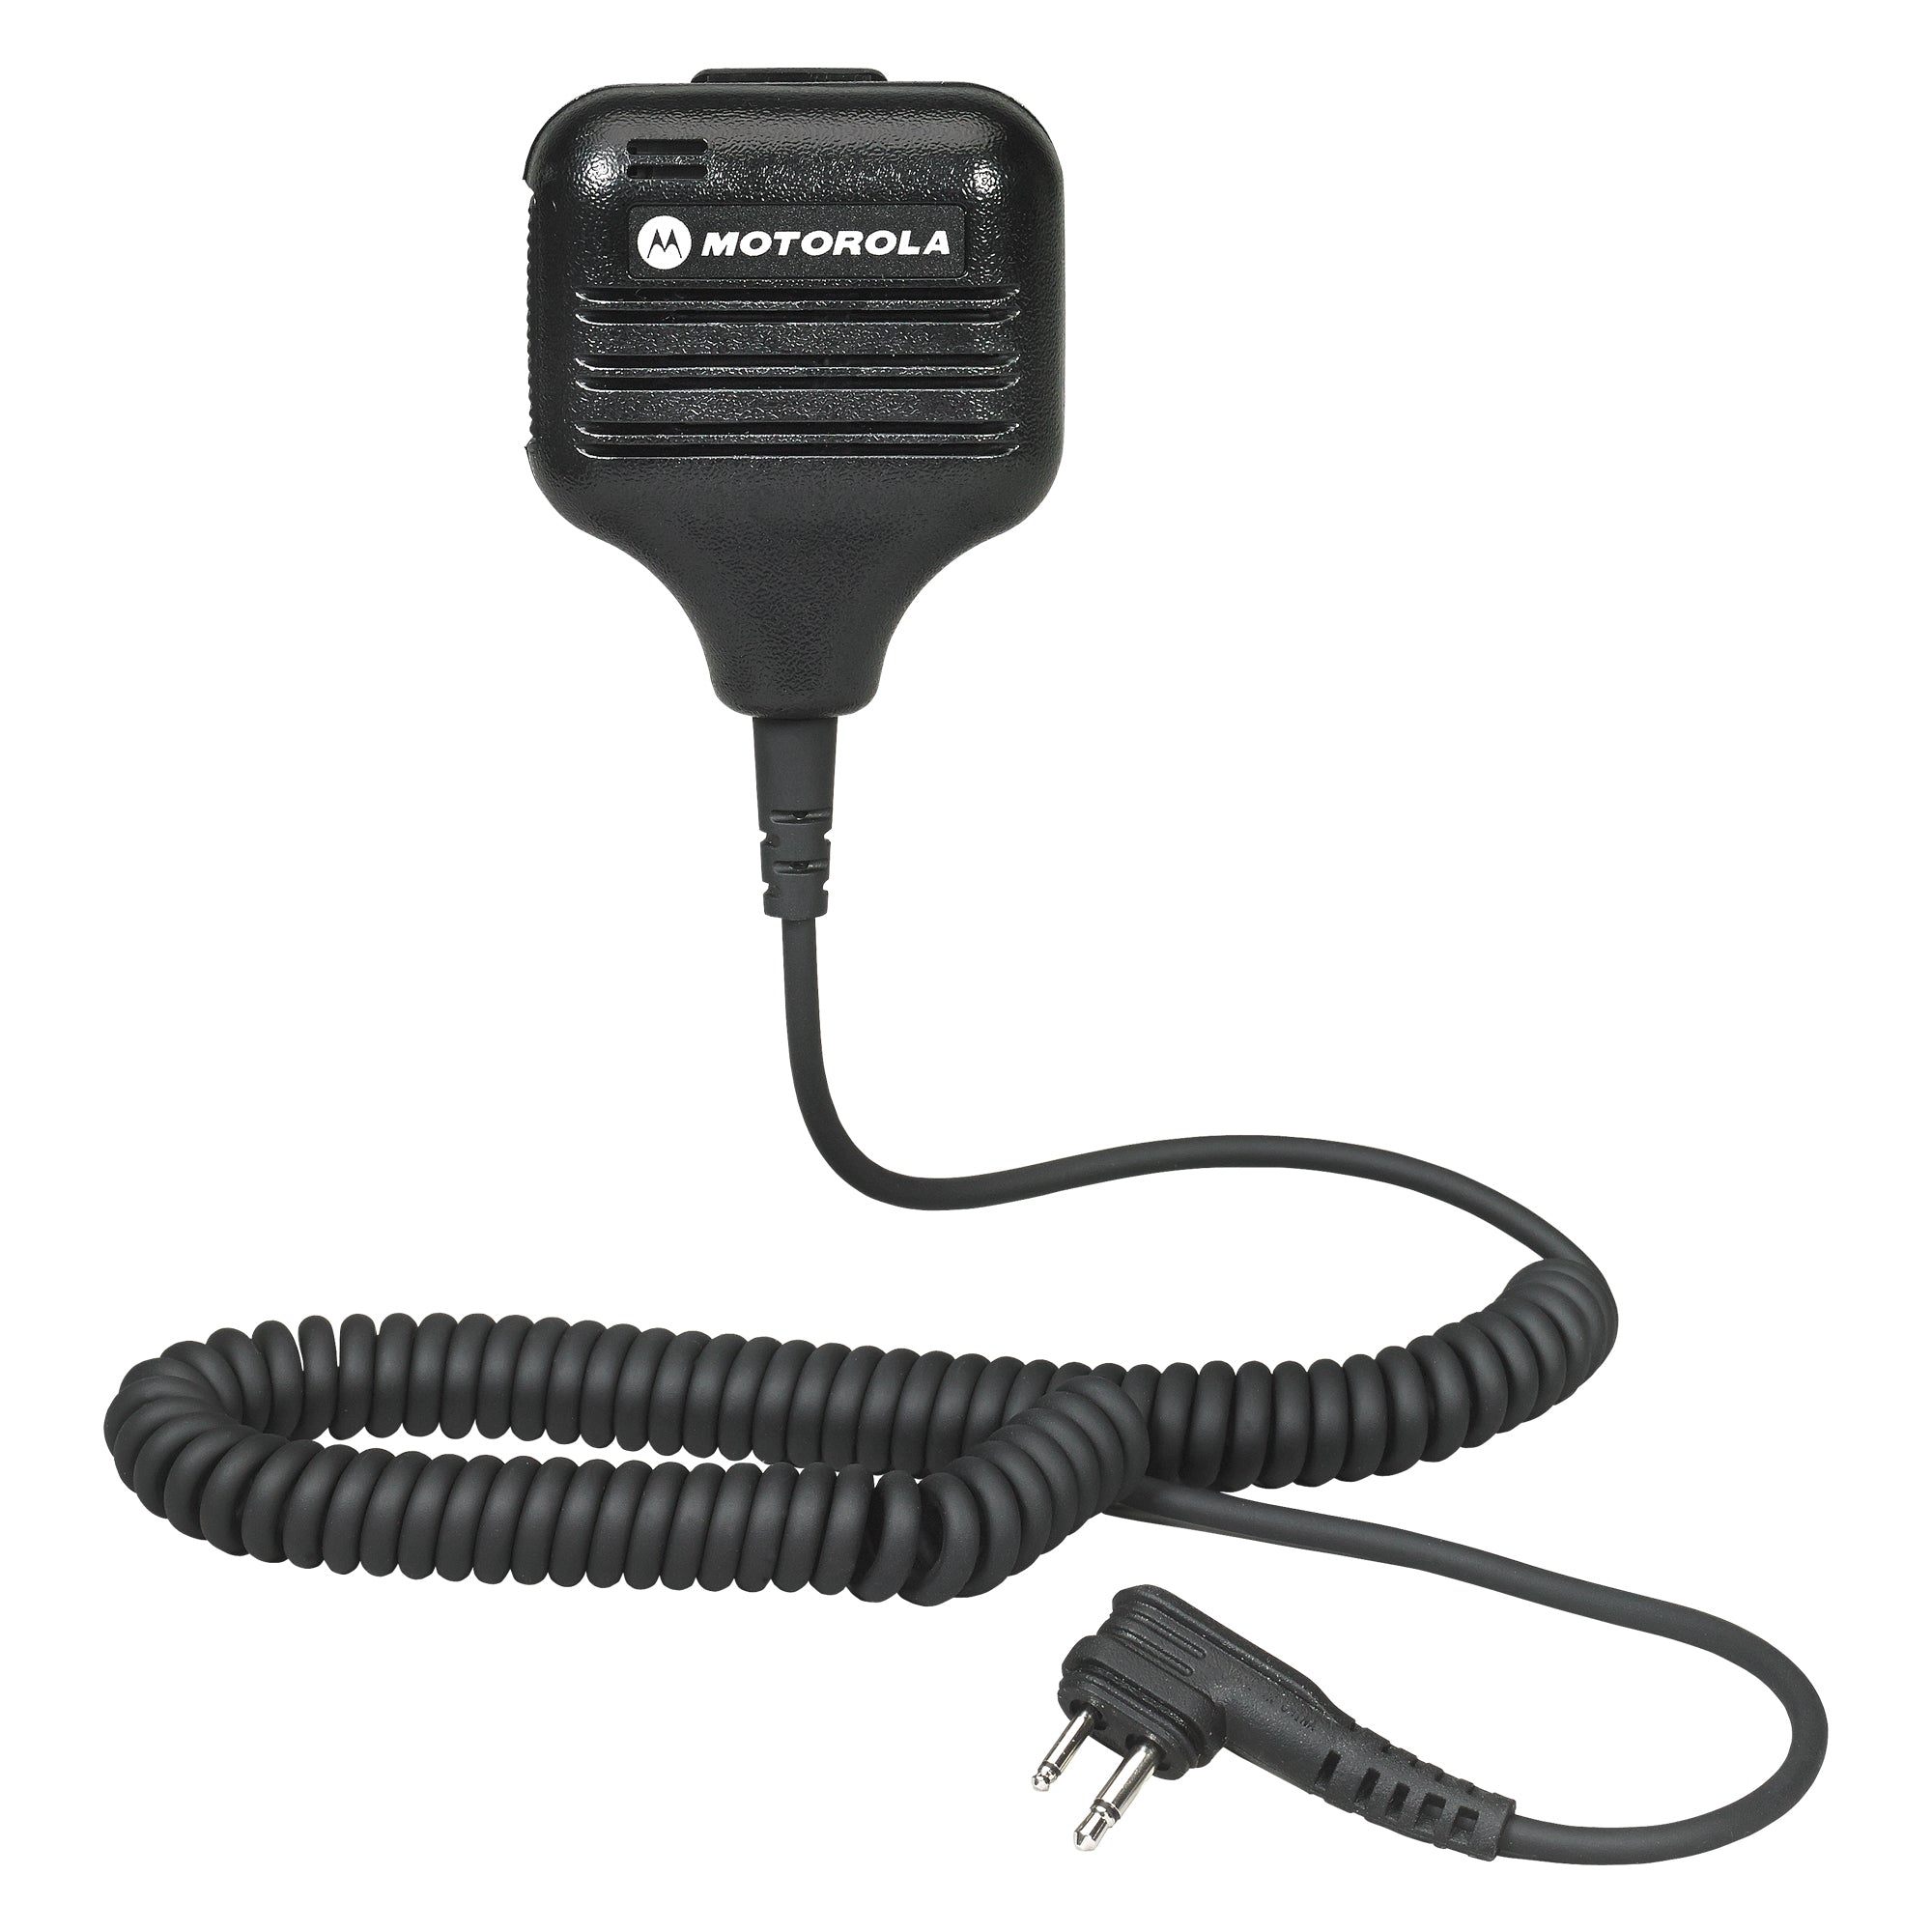 Motorola RMU2040 12 pack with Multi Charger and Speaker Microphones|  TwoWayRadioGear